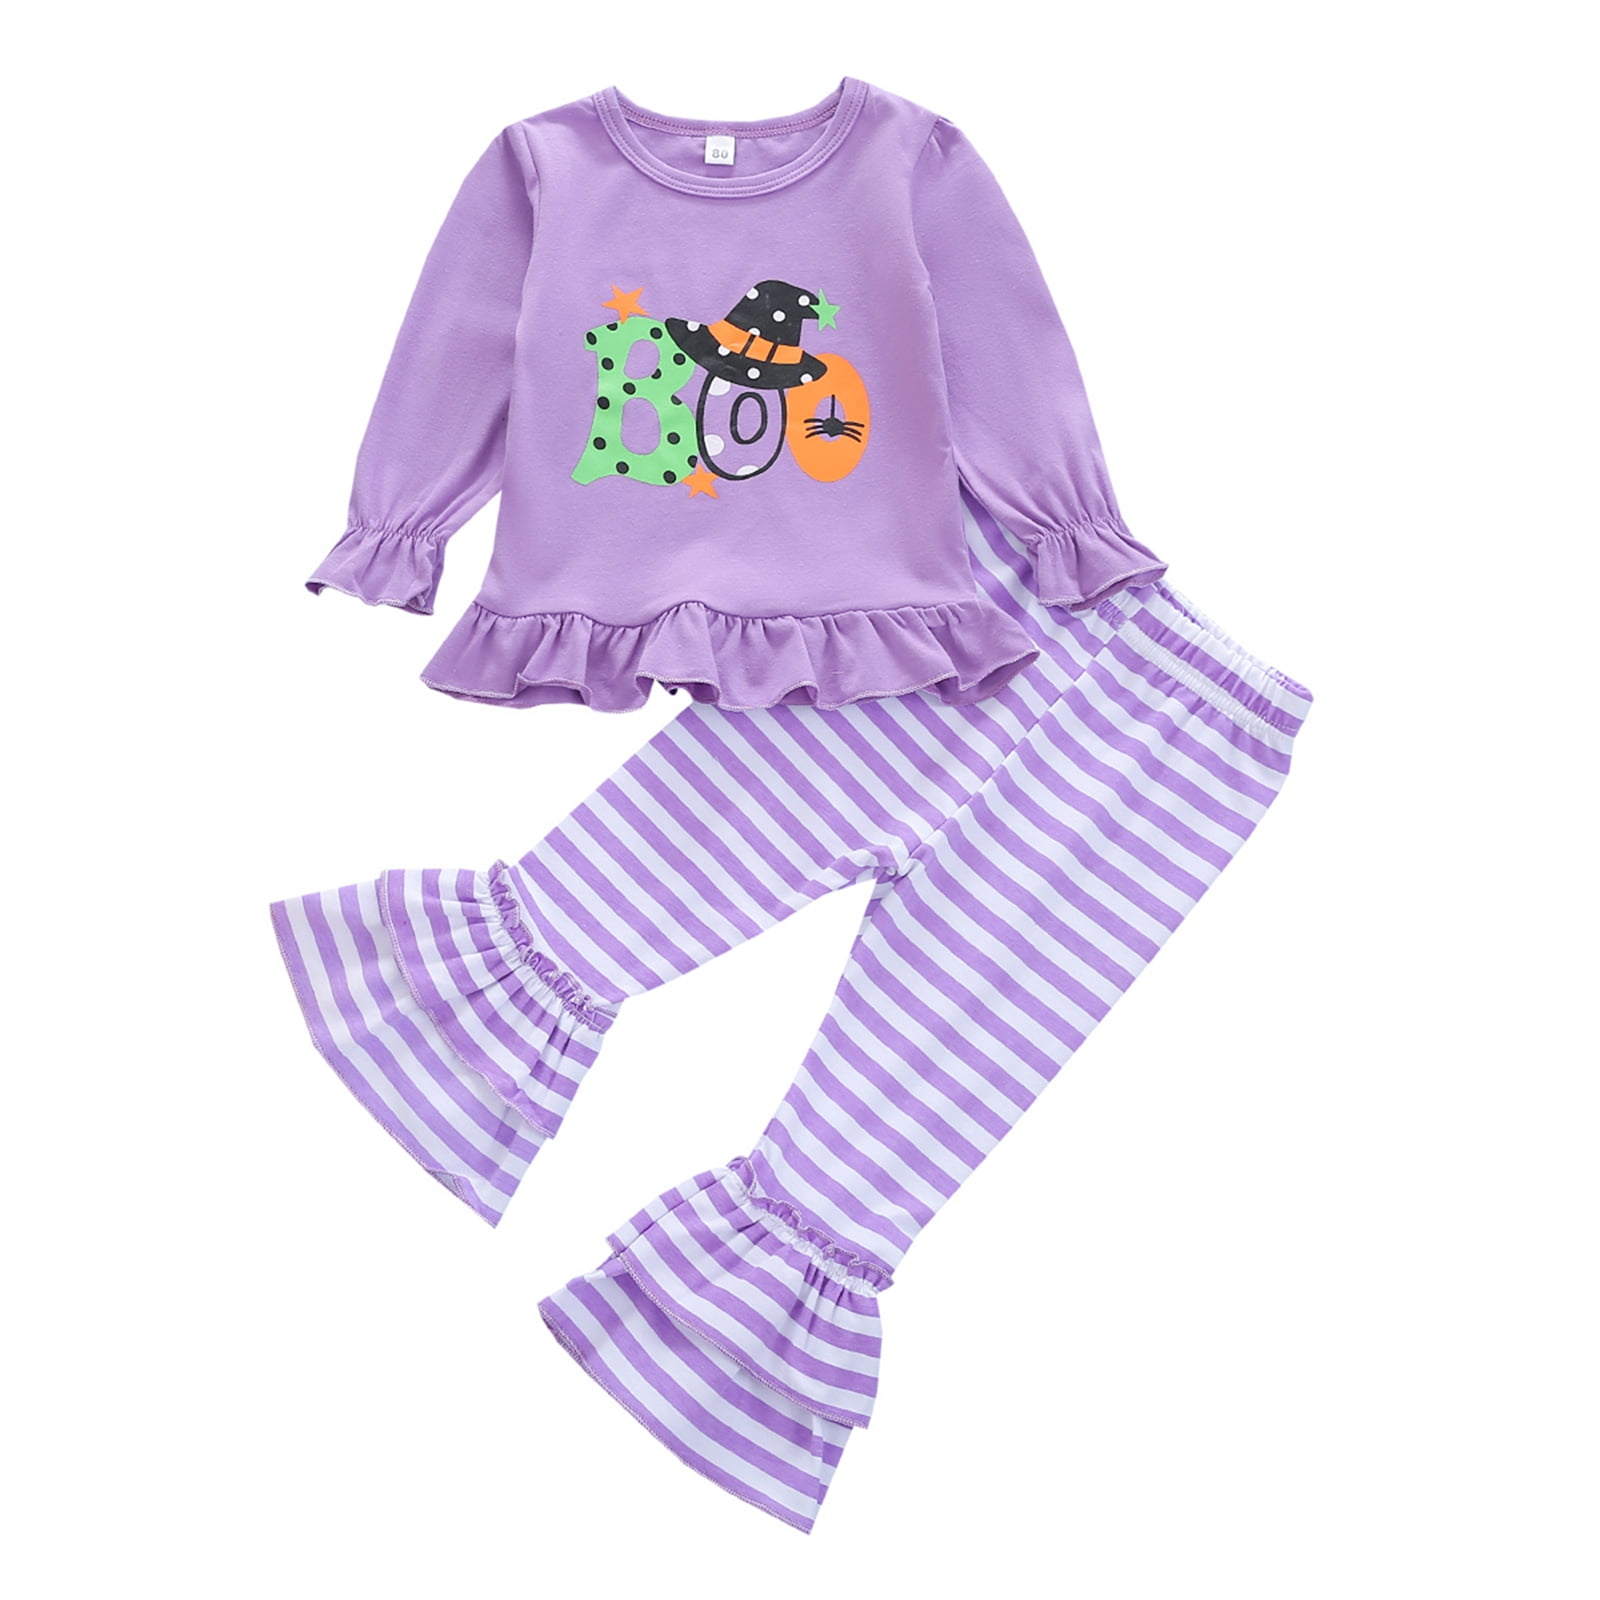 kaiCran Baby Boys Girls Short Sleeve Halloween Letter Cartoon Printed Tops Striped Pants Halloween Clothes Outfits Set